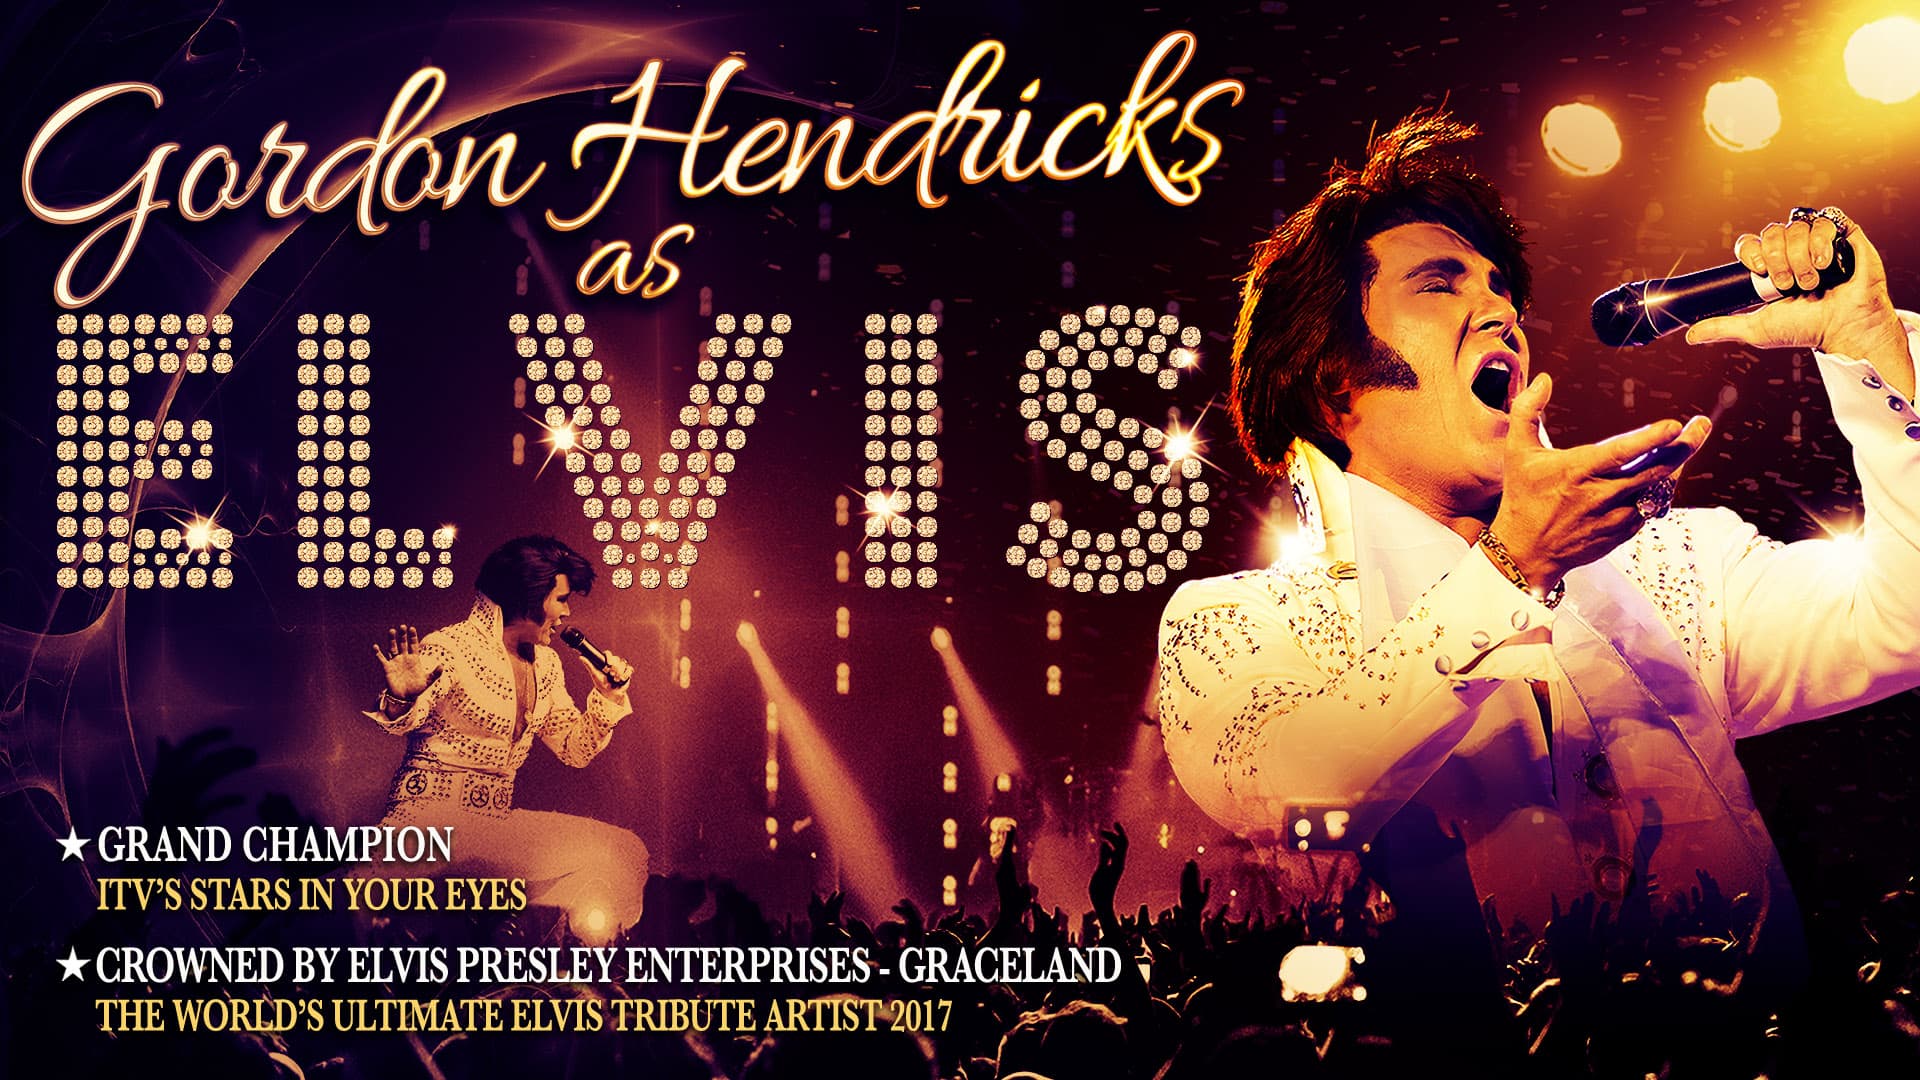 Gordon Hendricks as Elvis